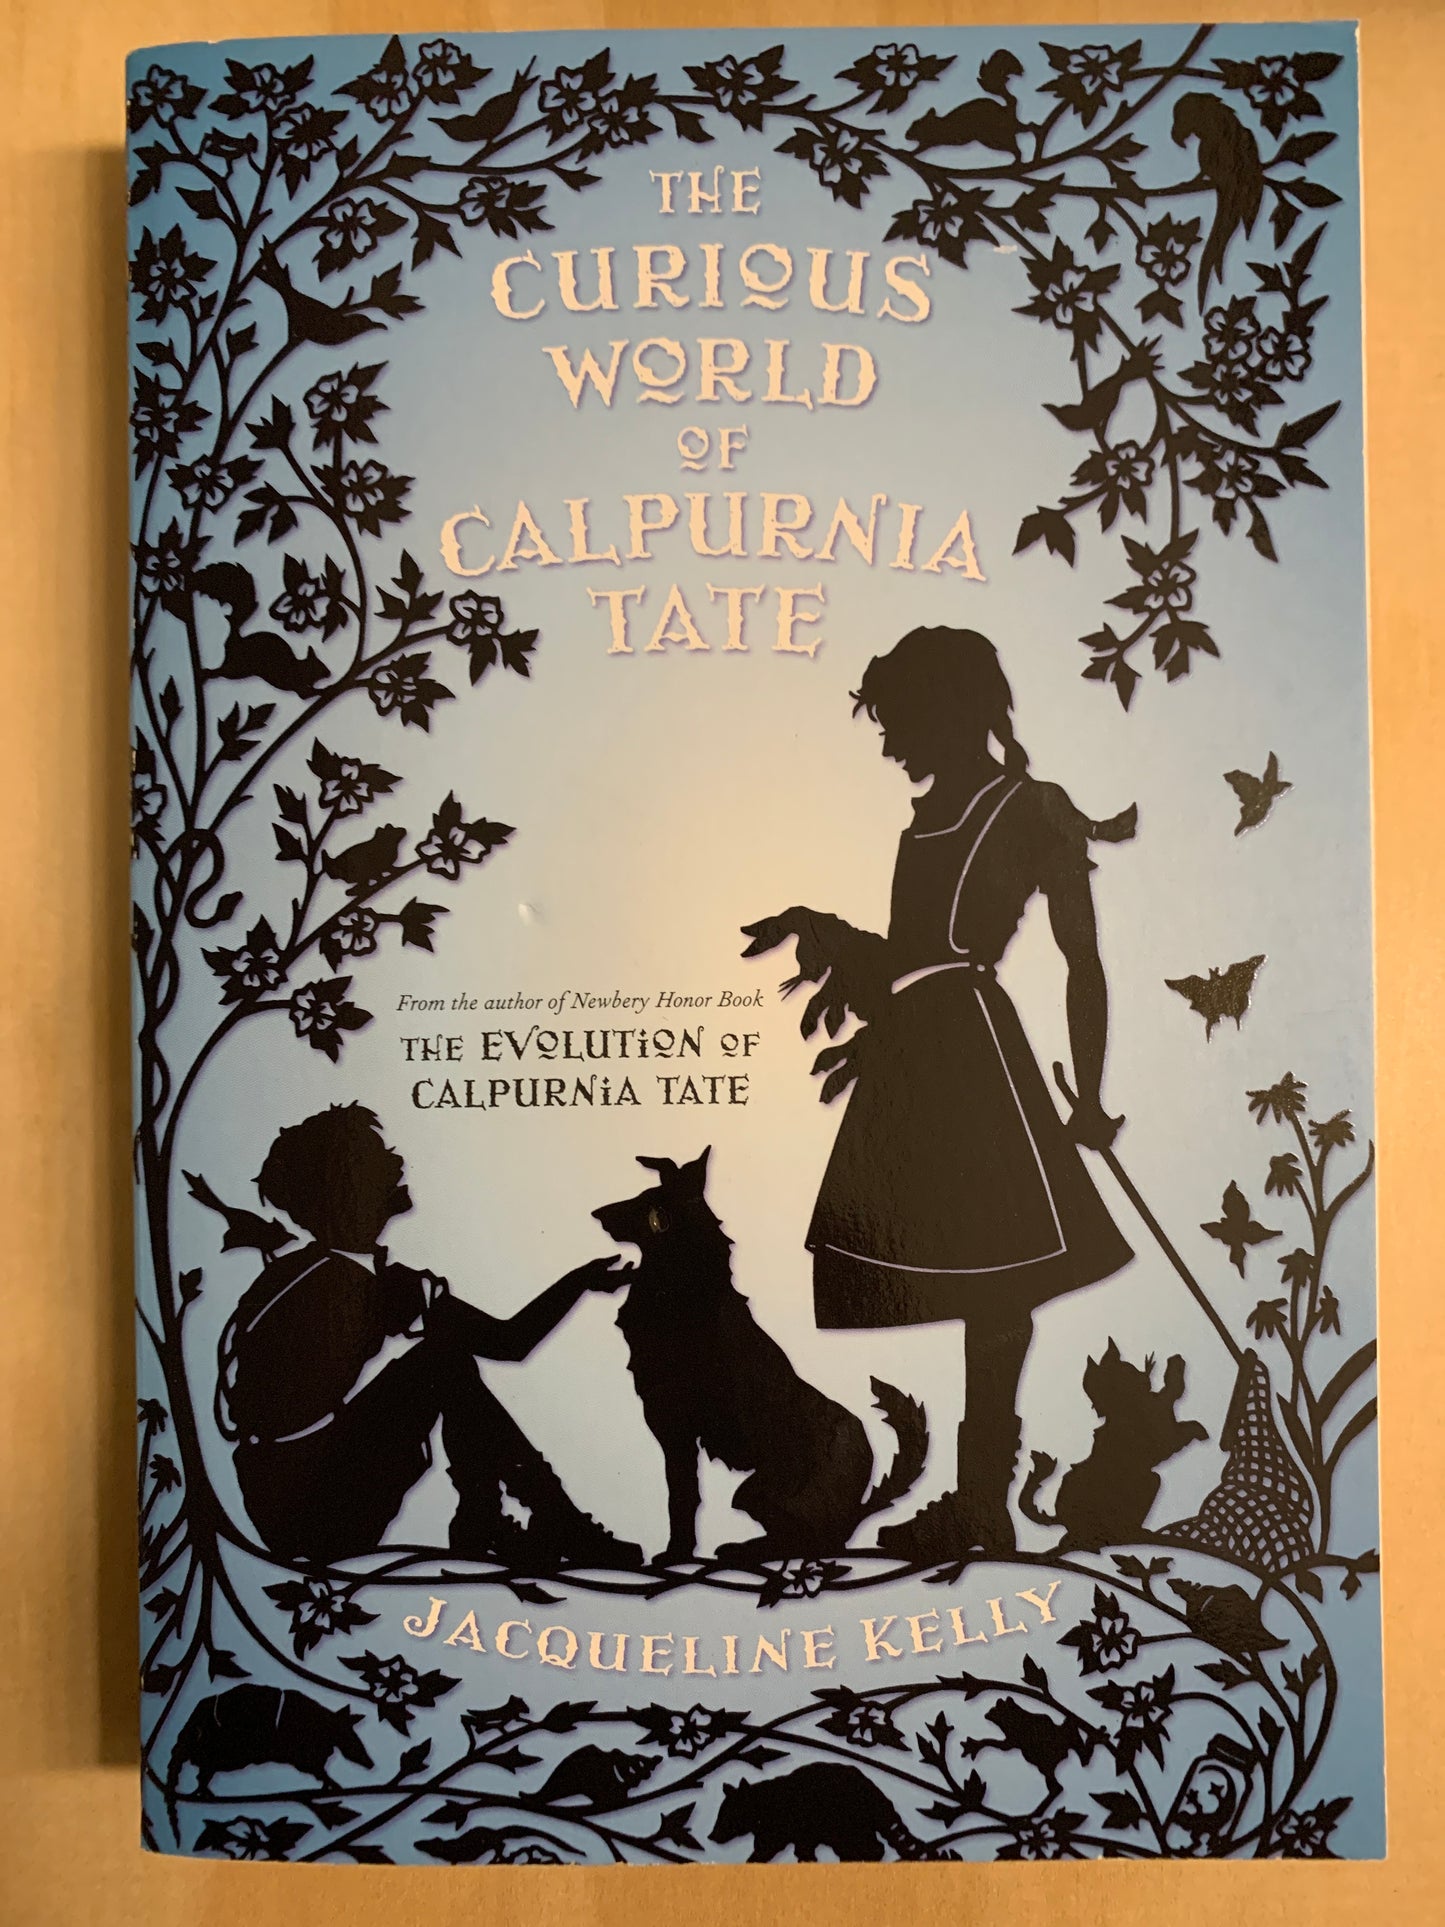 The Curious World of Calpurnia Tate